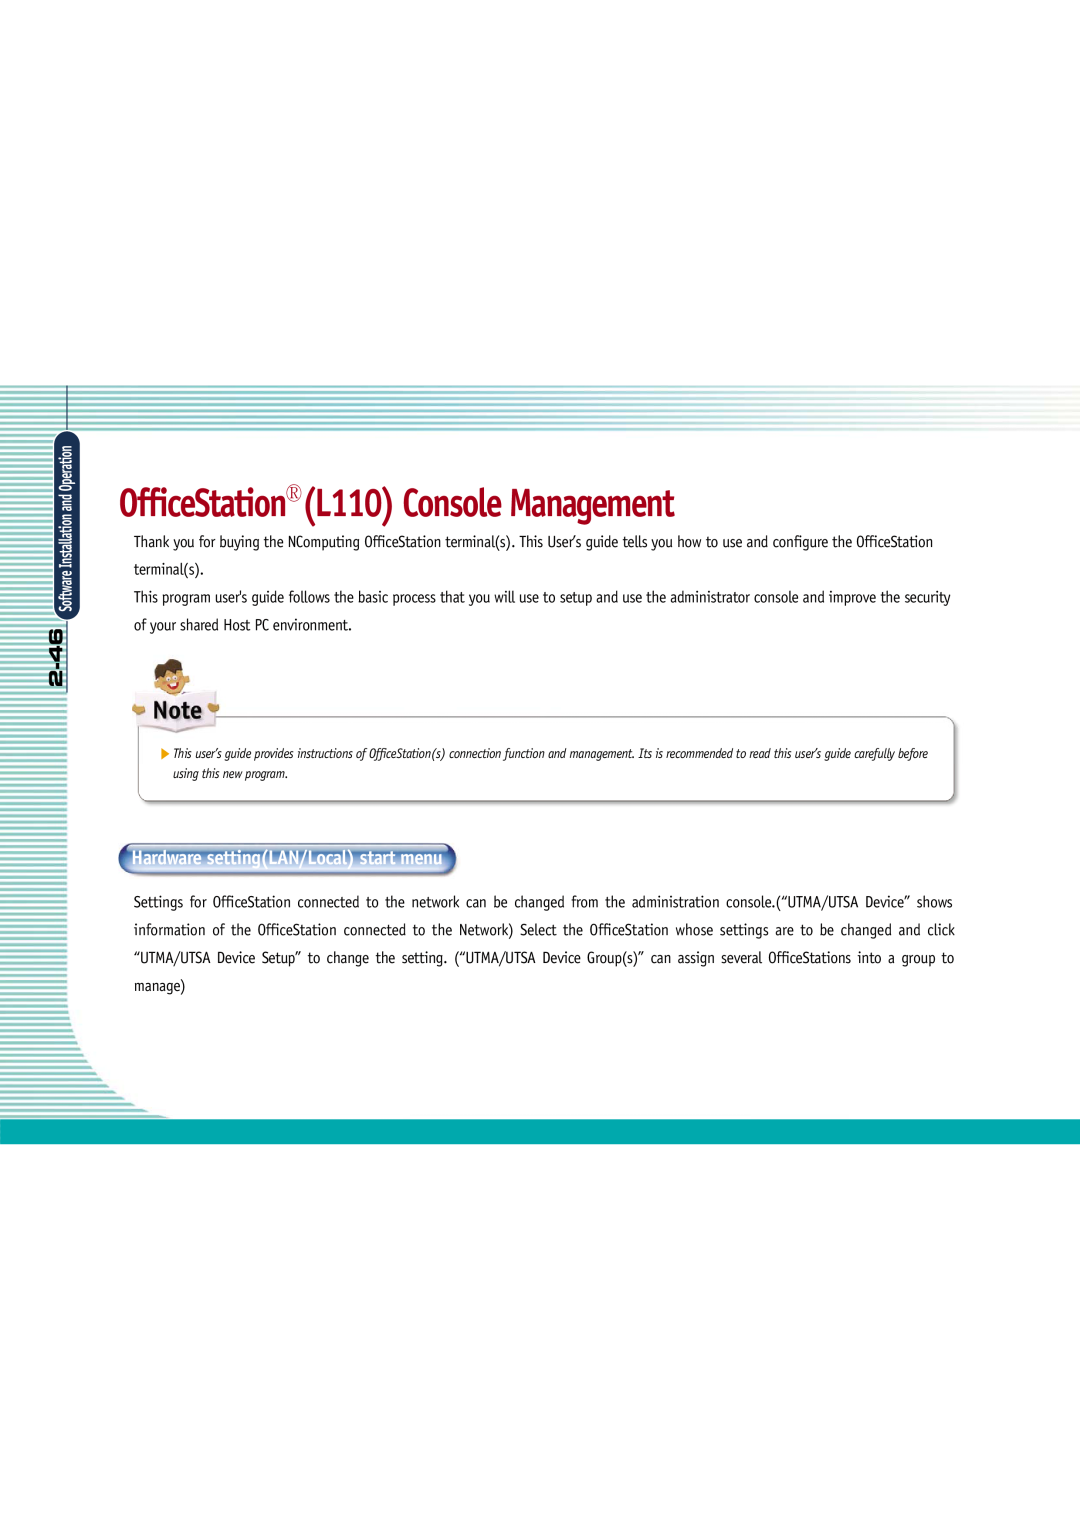 Gateway manual OfficeStation L110 Console Management, Hardware settingLAN/Local start menu, 2-46 